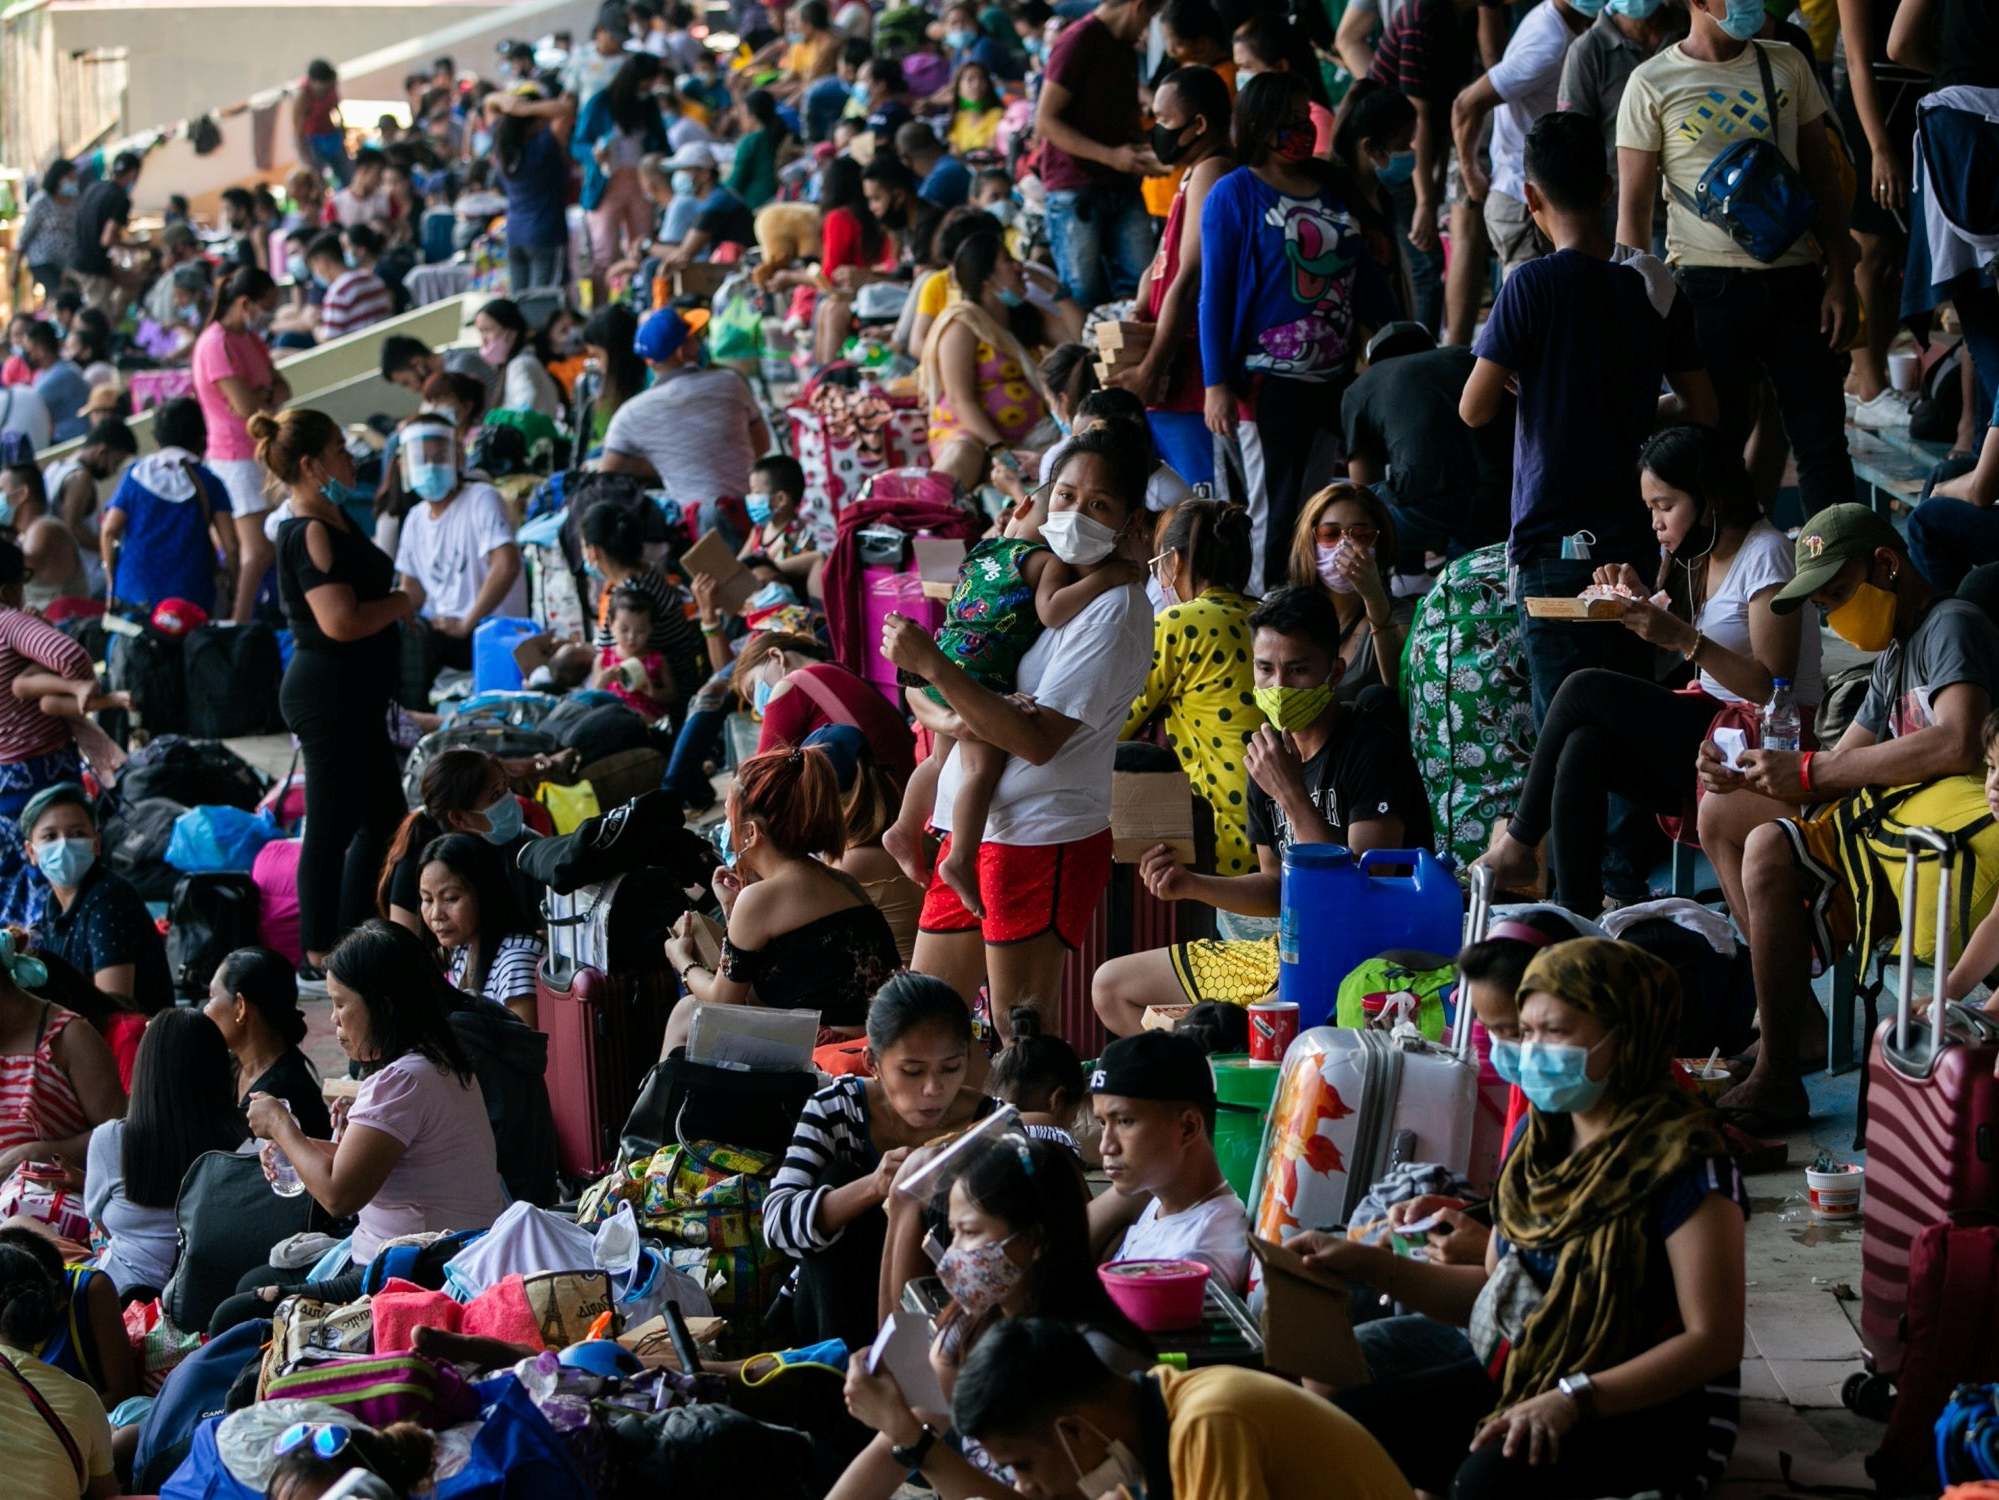 Coronavirus: Thousands flood Manila baseball stadium as government transportation system fails - The Independent